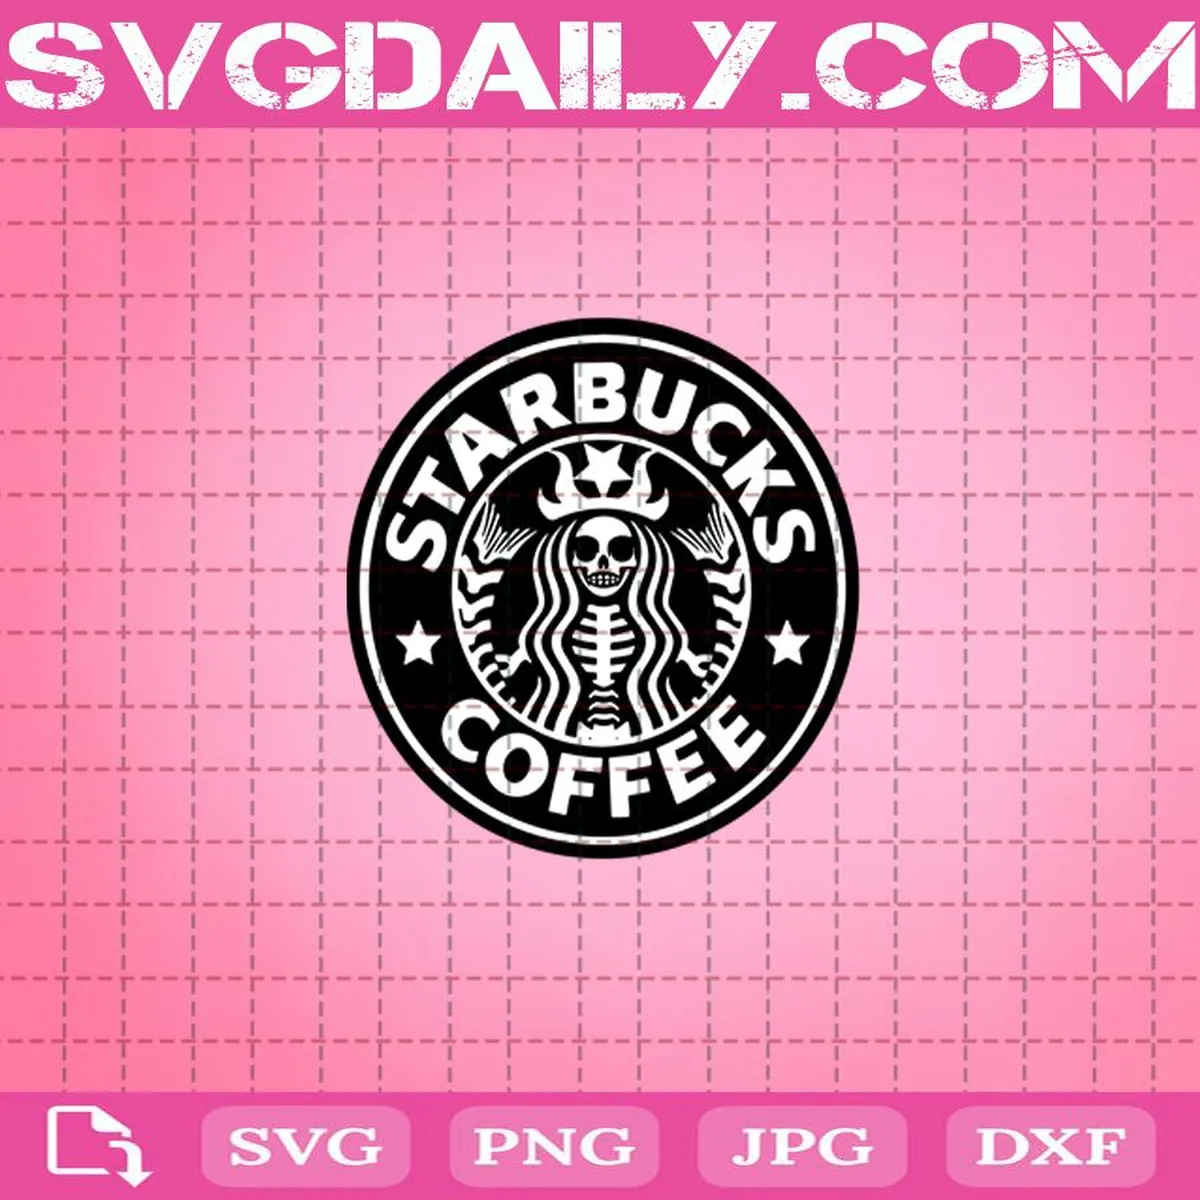 Skeleton Starbucks Coffee Halloween Svg, Starbucks Coffee Svg, Starbucks Svg, Starbucks Logo Svg, Coffee Svg, Halloween Svg